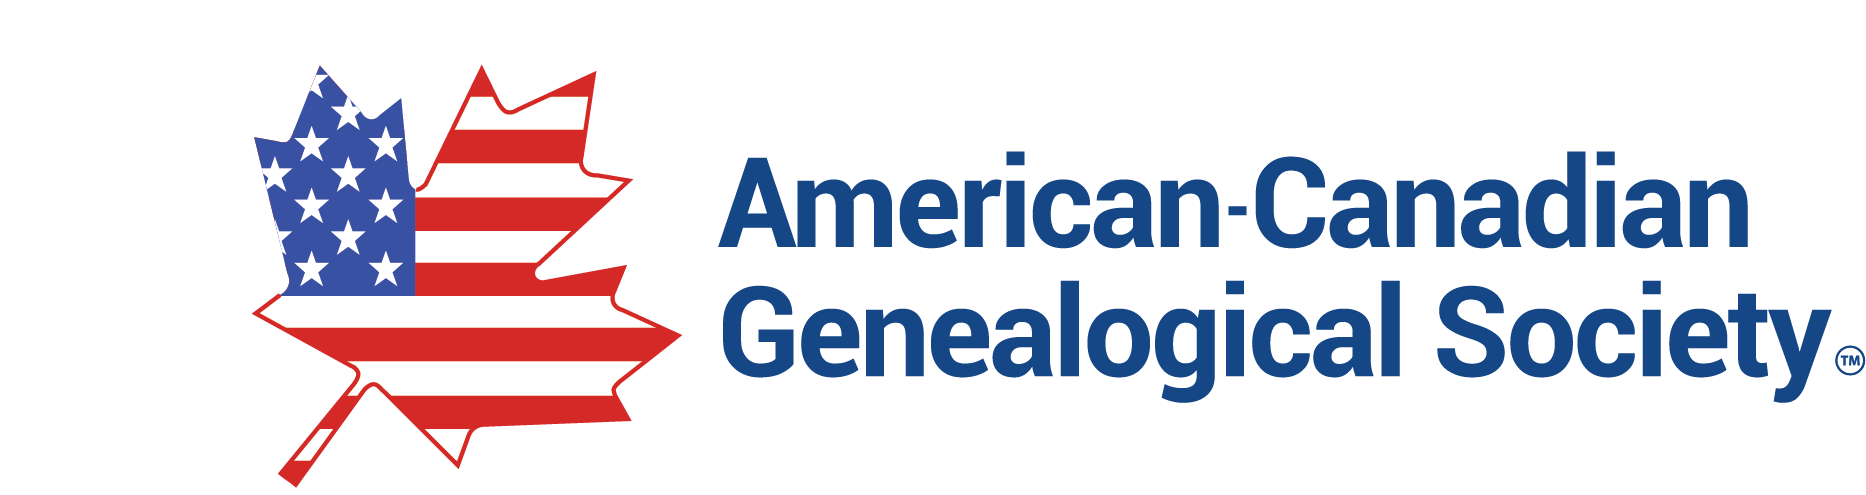 American-Canadian Genealogical Society